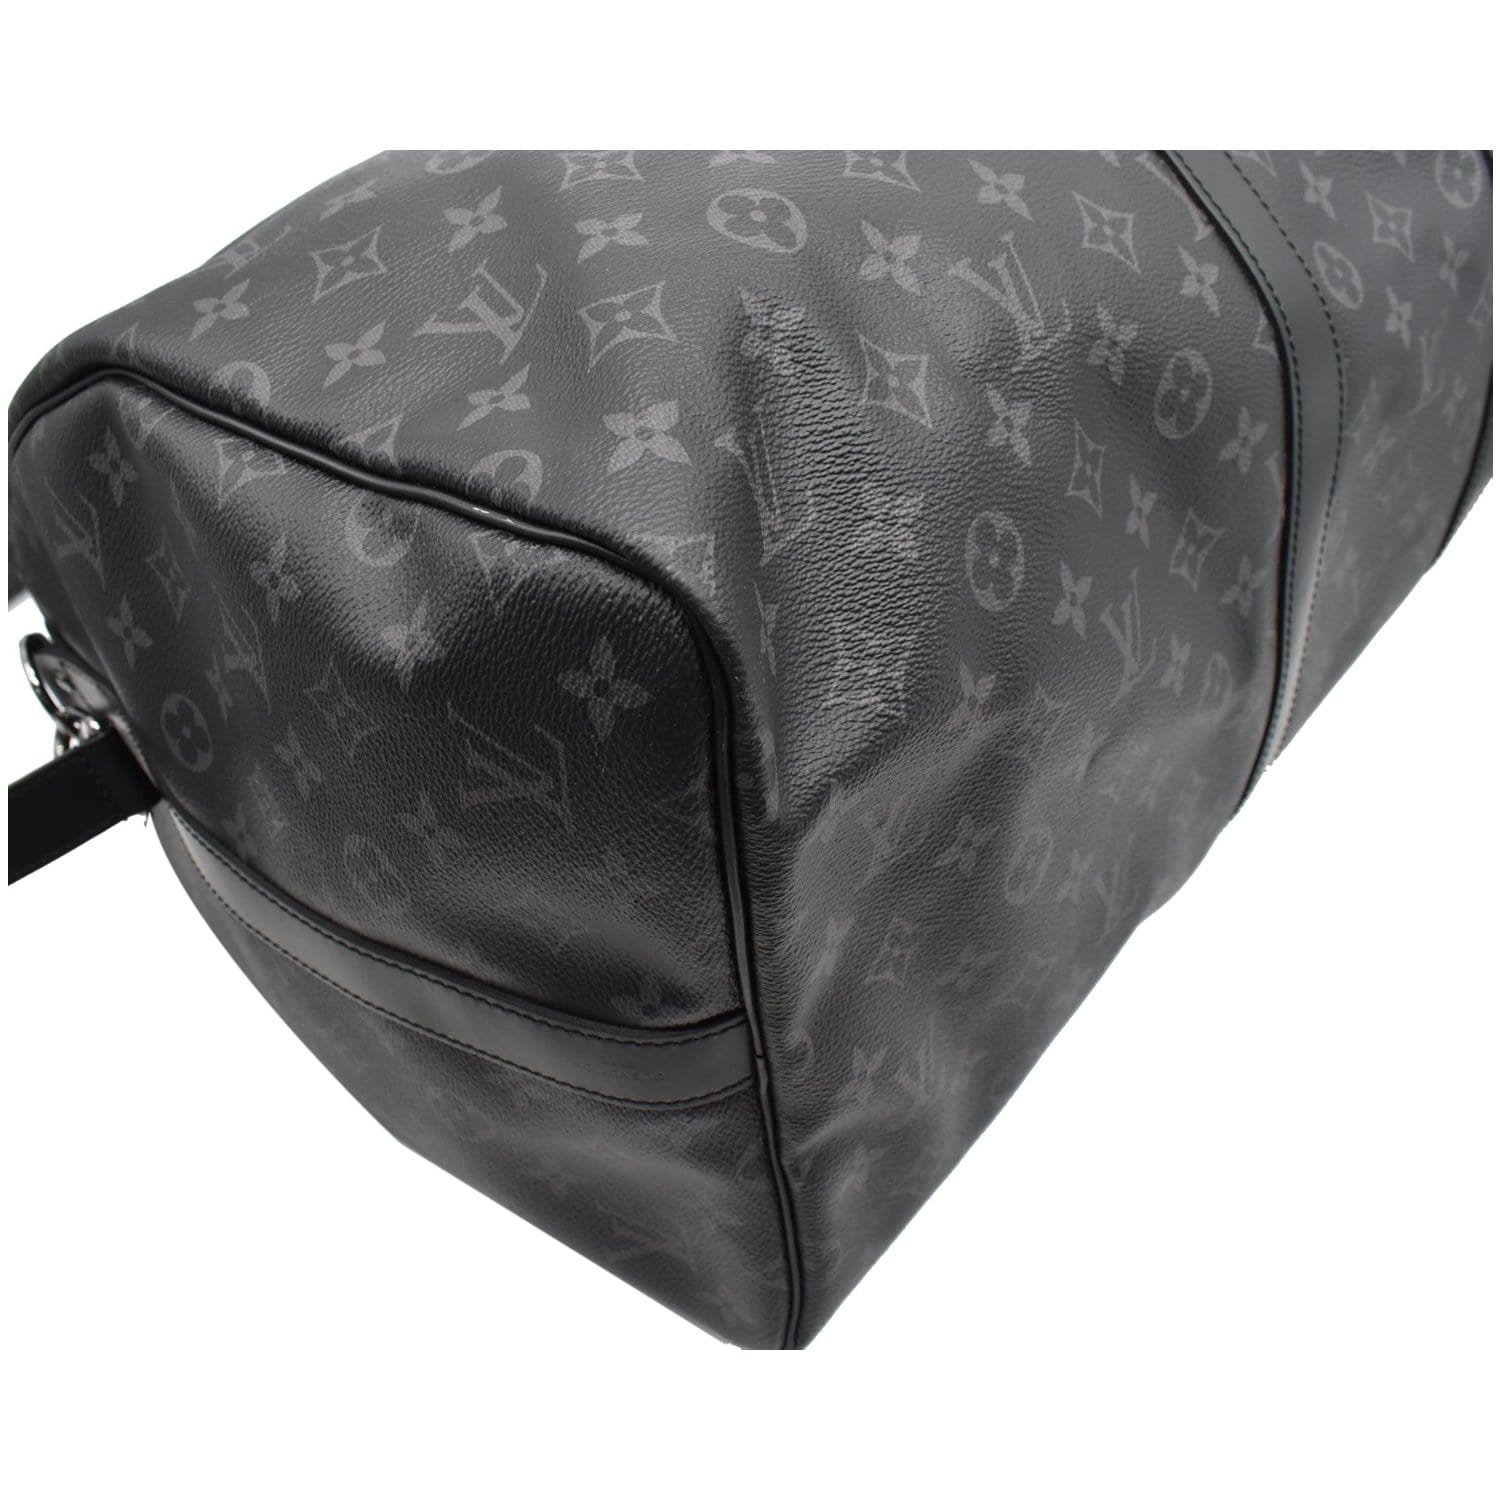 Louis Vuitton Keepall 55 Travel Bag - Farfetch